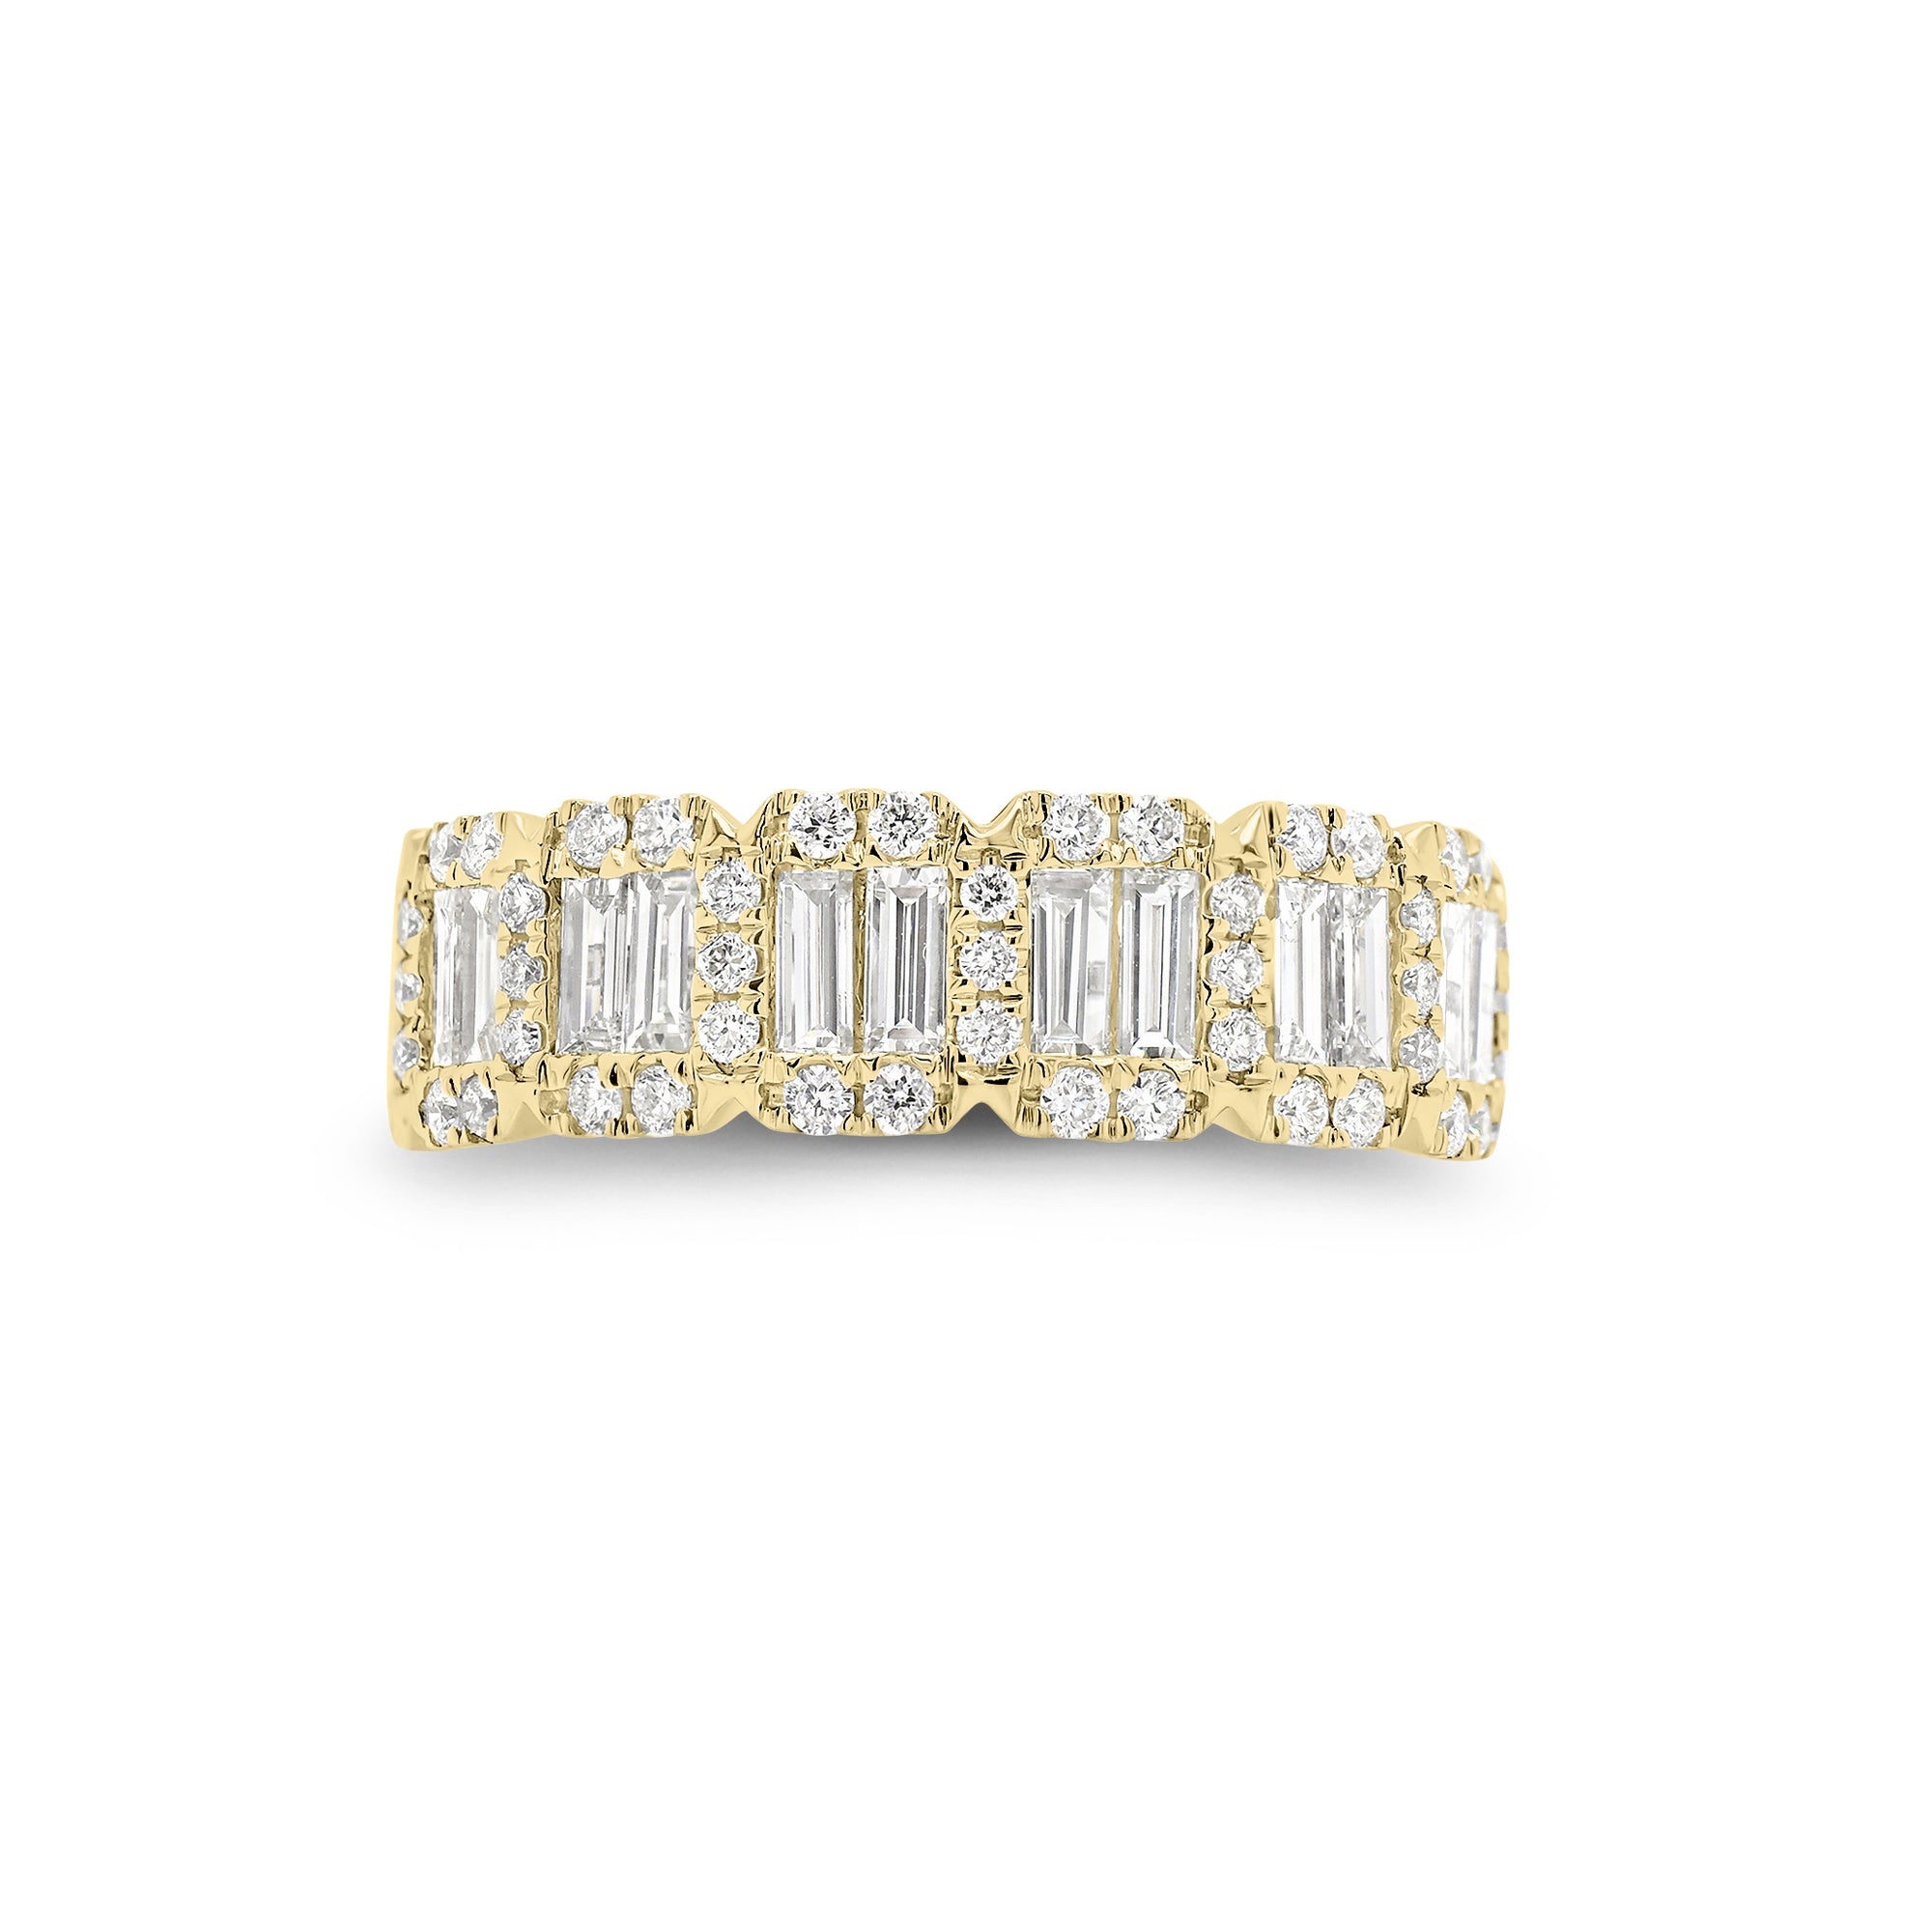 Emerald-Cut Diamond Halo Illusion Wedding Band - 18K gold weighing 3.61 grams  - 52 round diamonds weighing 0.34 carats  - 14 slim baguettes weighing 0.67 carats